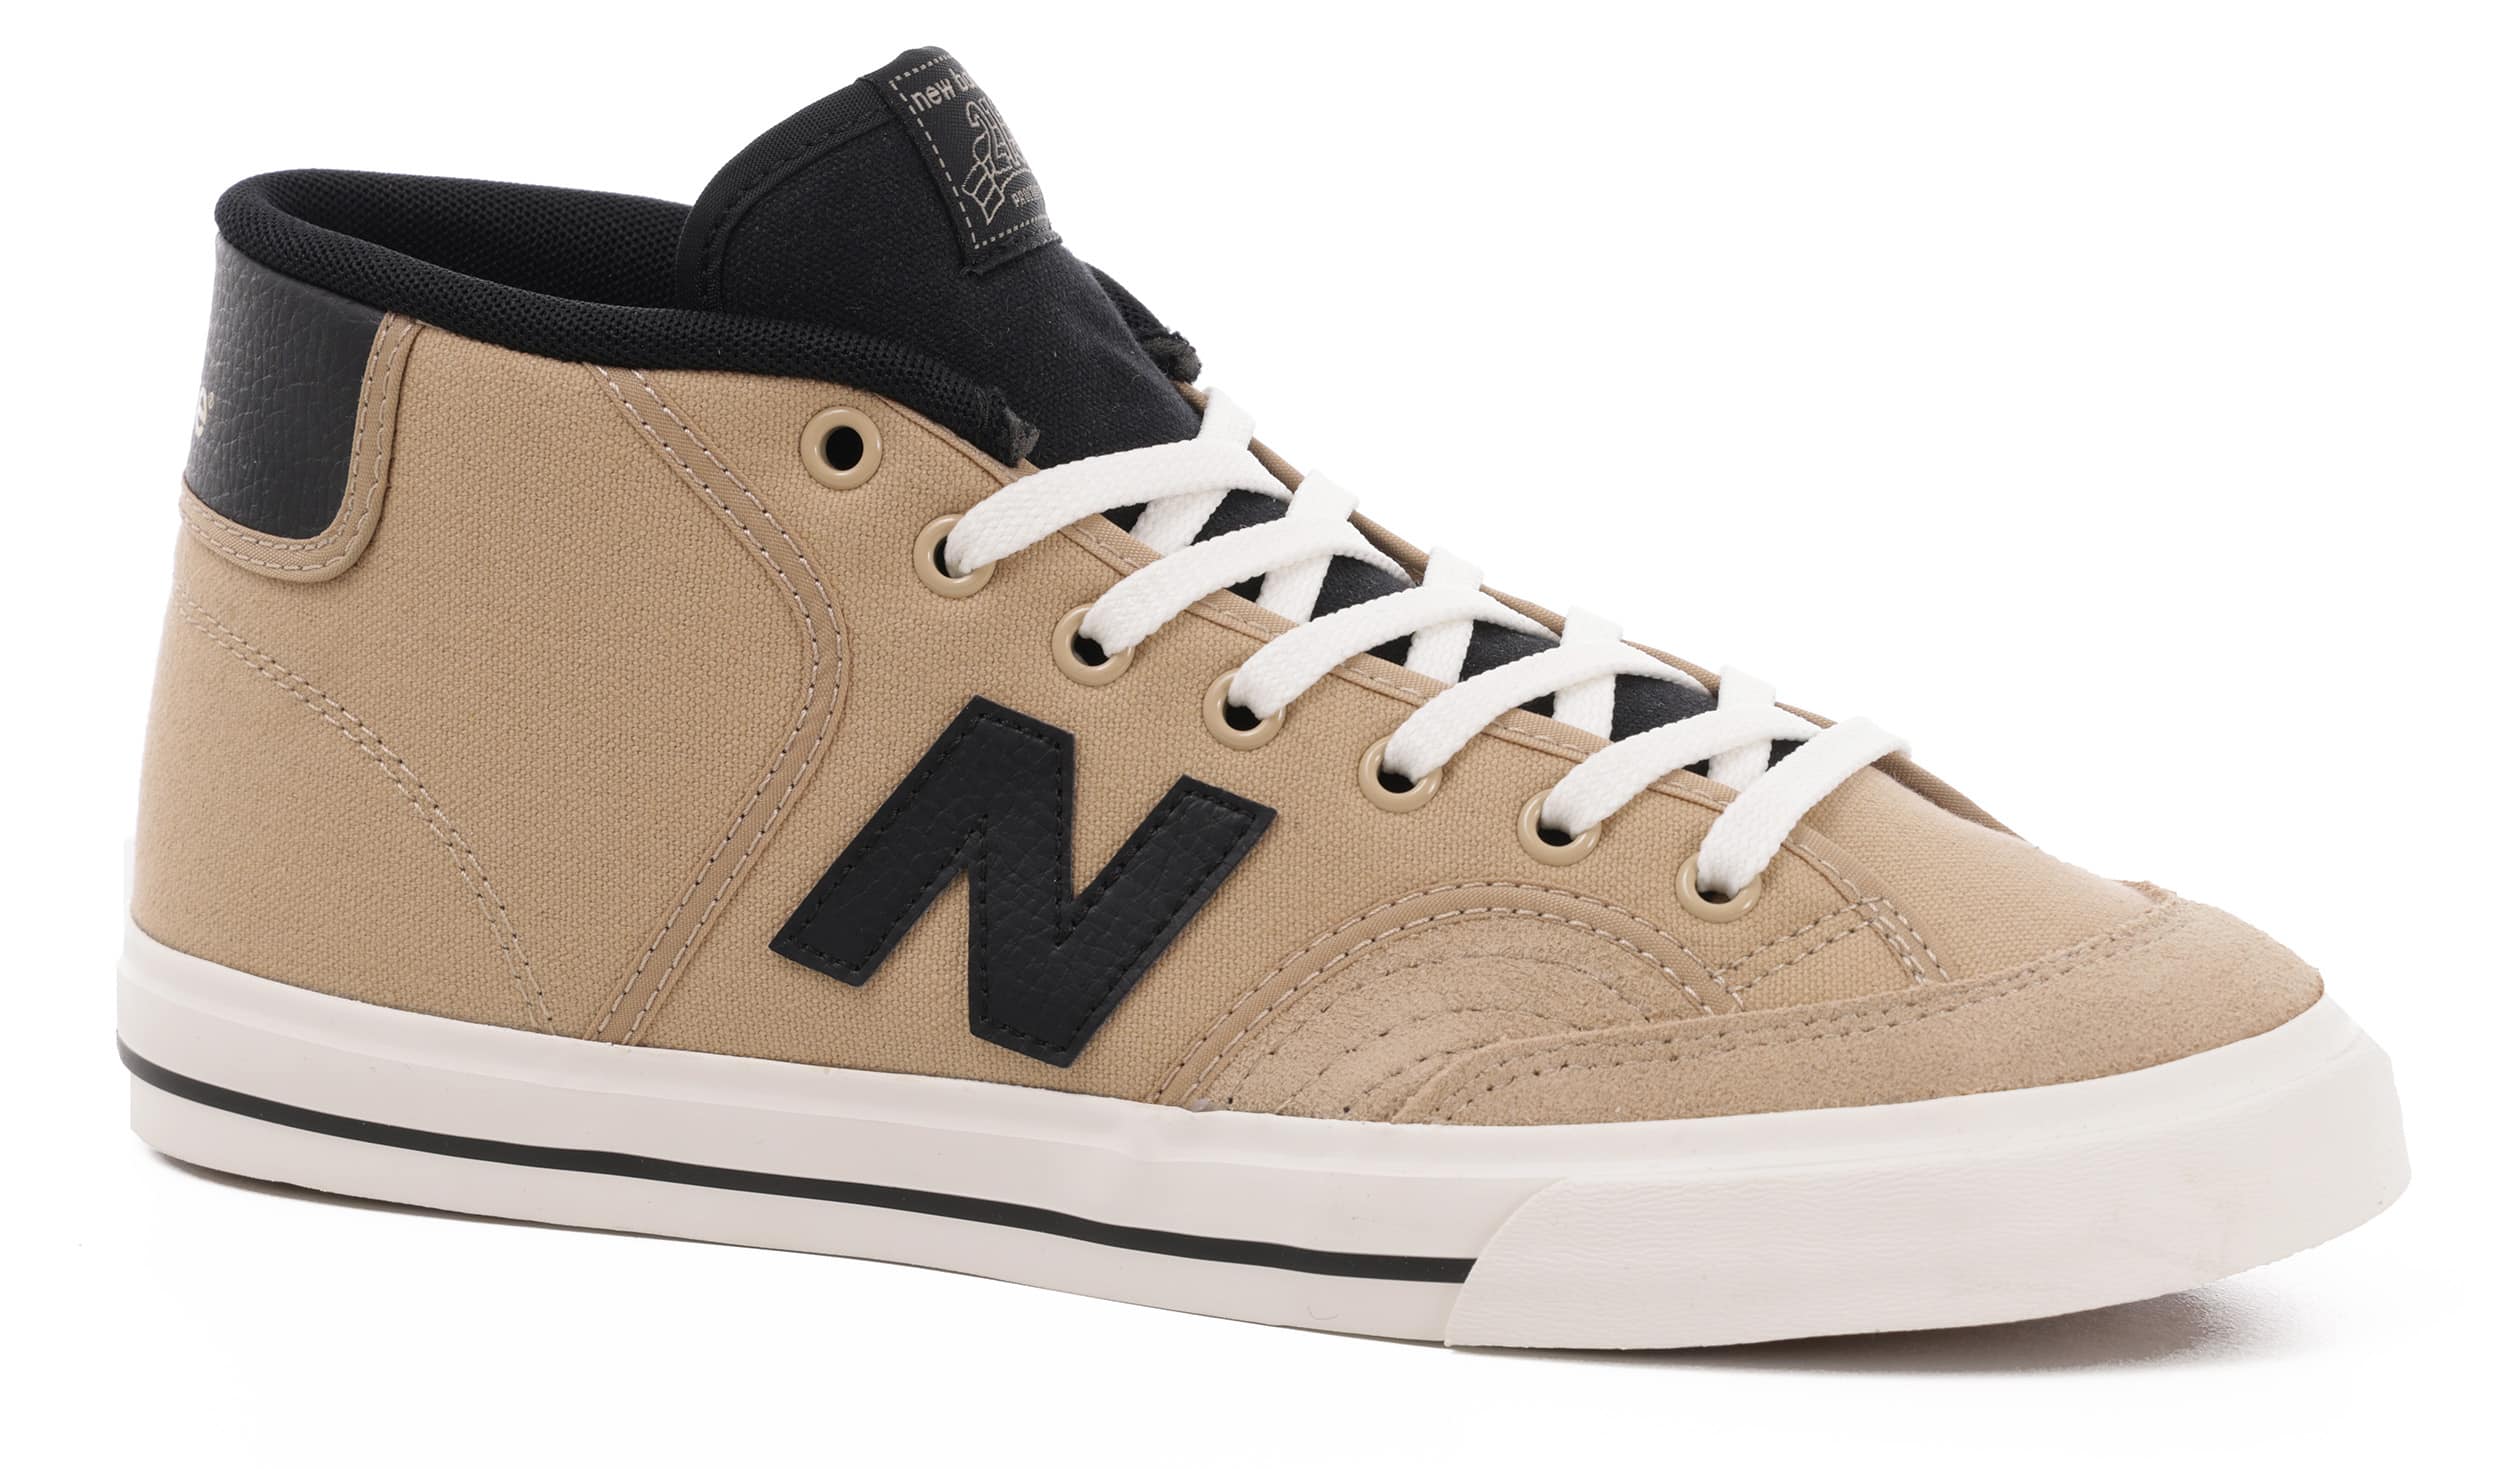 New Balance Numeric 213 Mid Skate Shoes - tan/black | Tactics